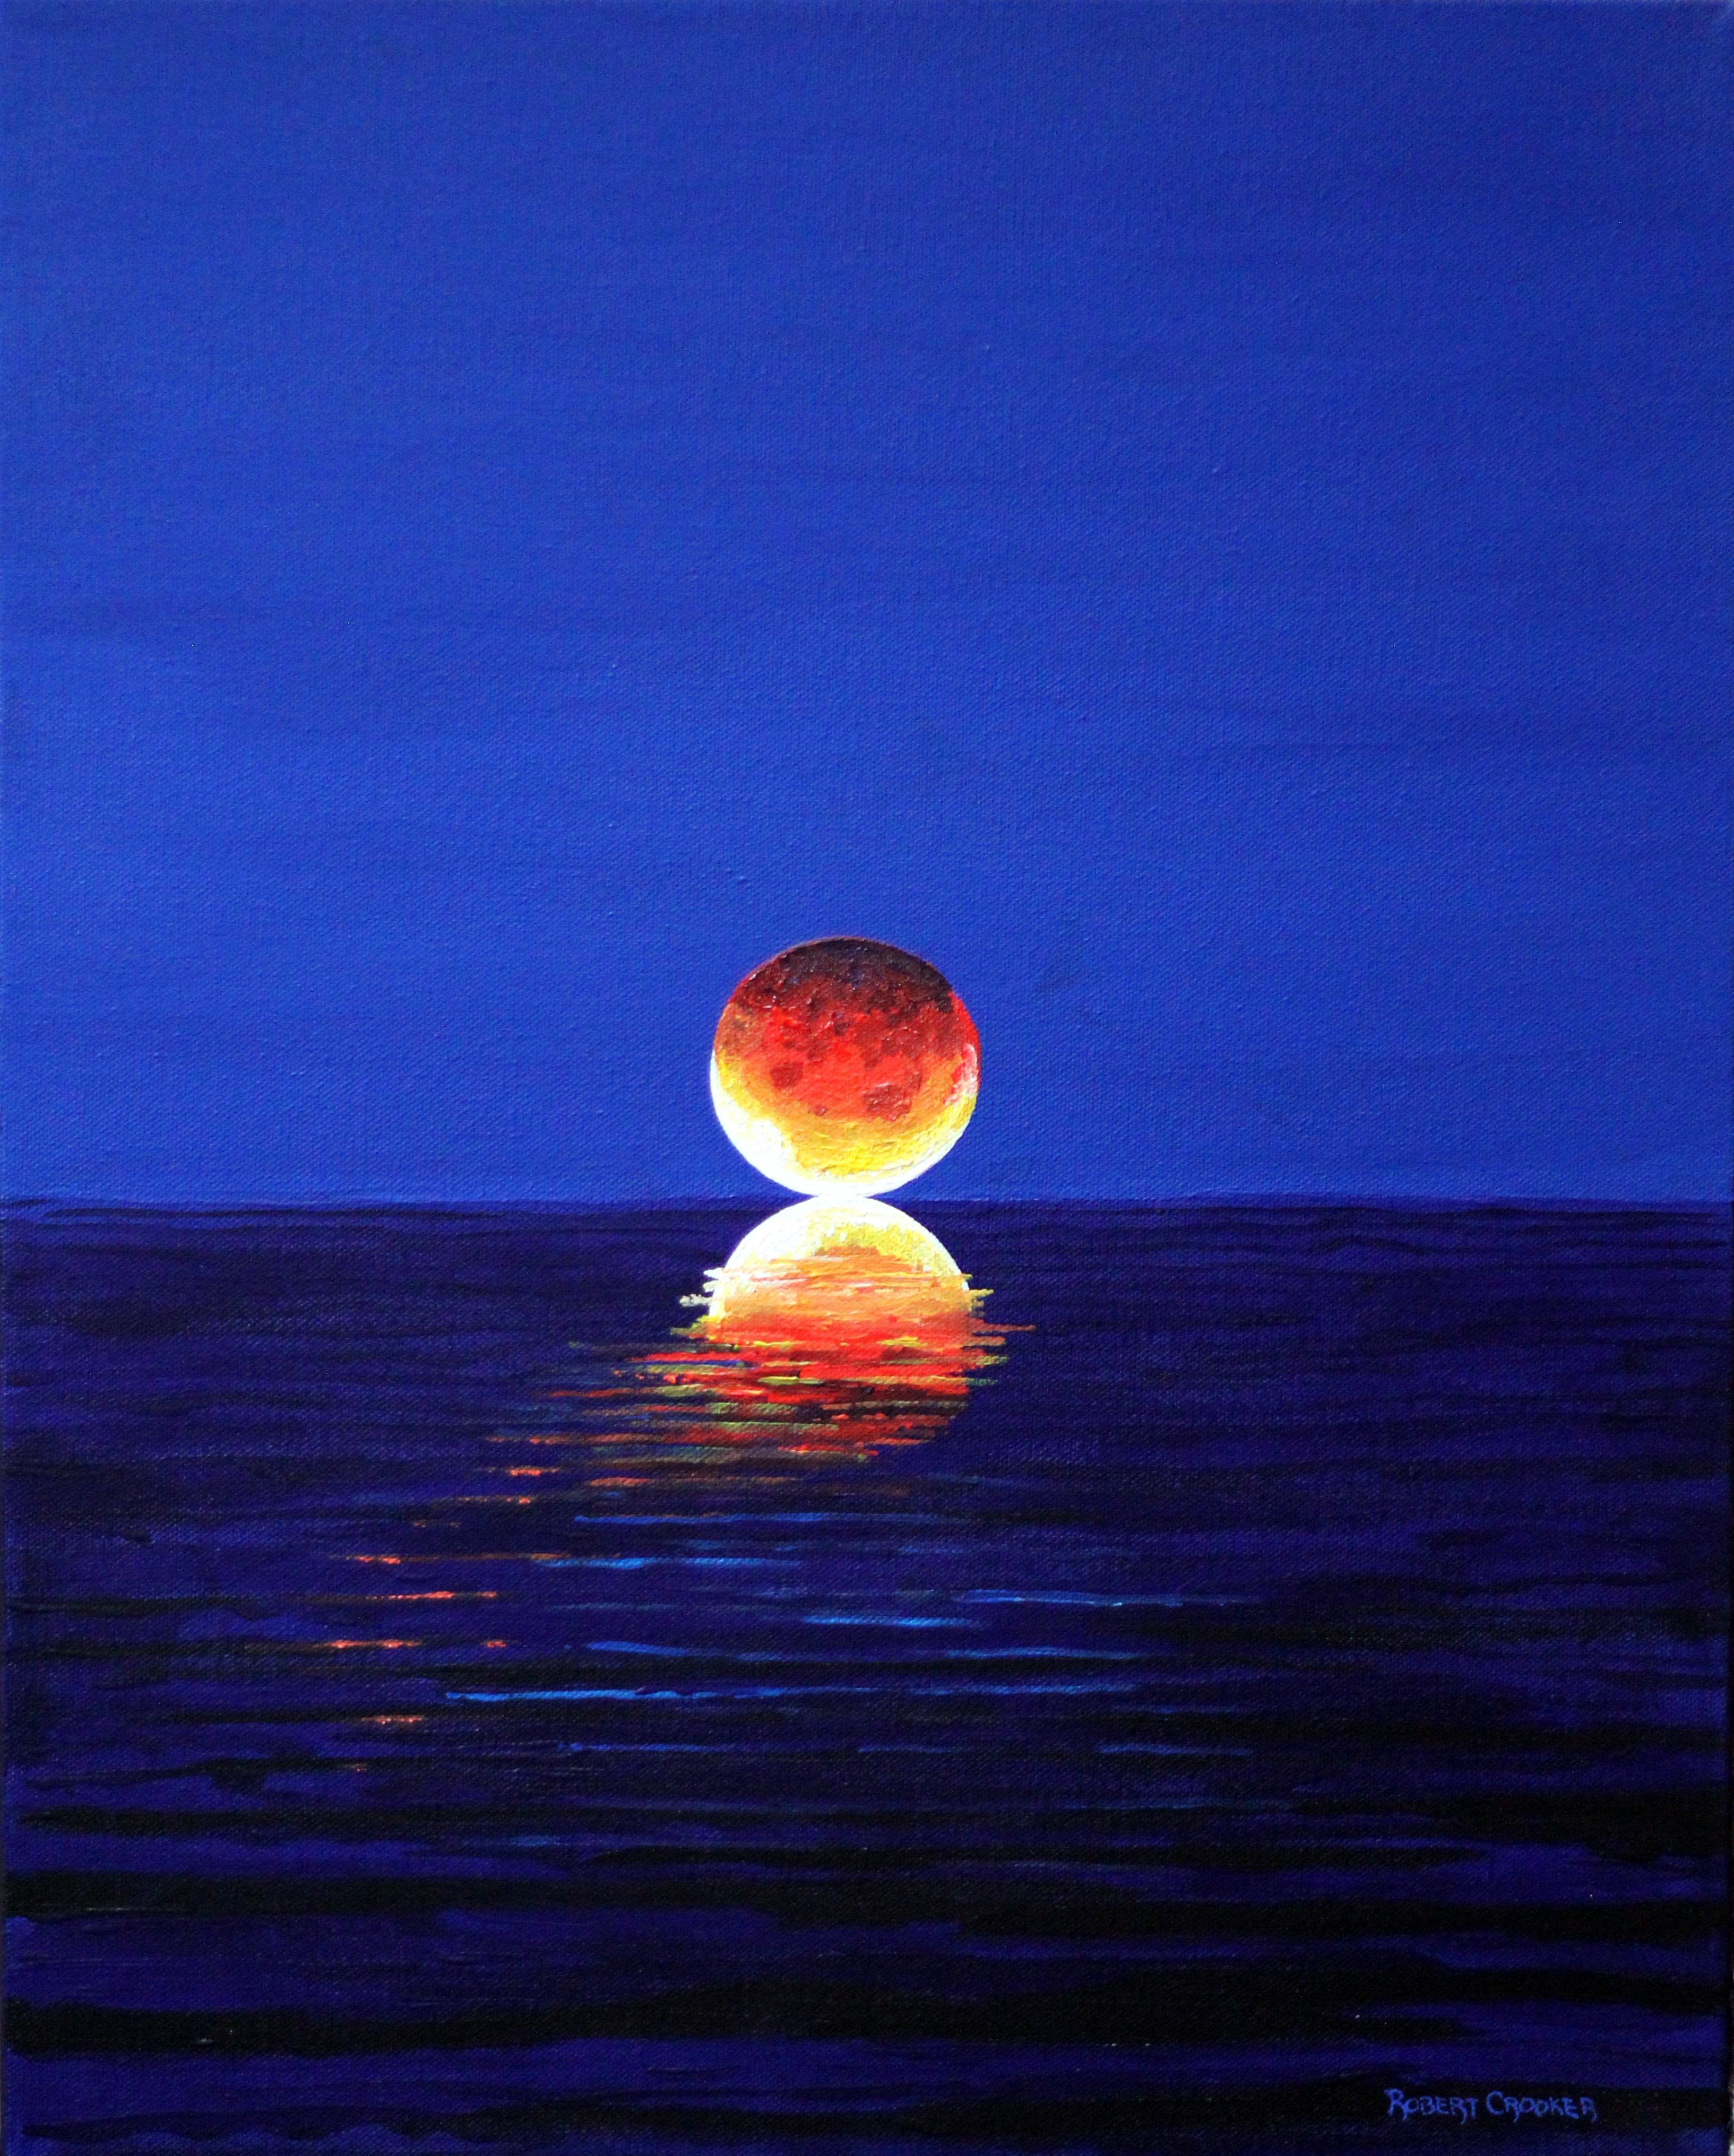 Robert Crooker Landscape Painting - Lunar Landing, Original Acrylic Painting, 2015